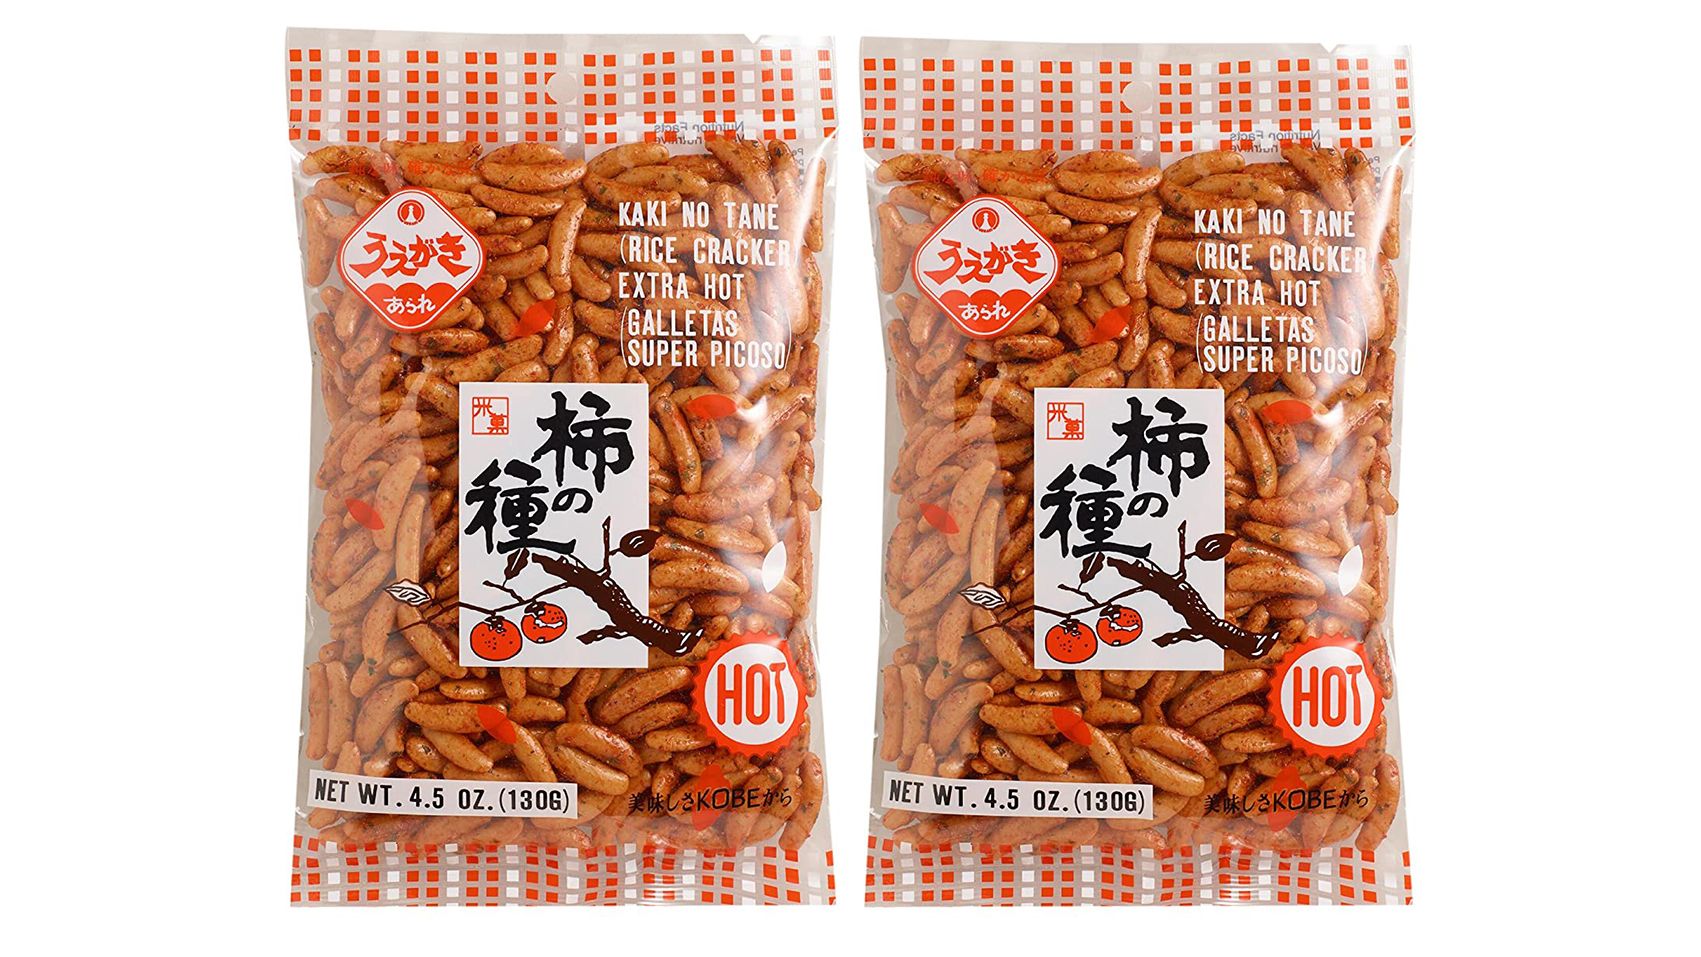 https://media.cnn.com/api/v1/images/stellar/prod/210301150322-spicyuegaki-beika-extra-hot-rice-crackers.jpg?q=w_1701,h_957,x_0,y_0,c_fill